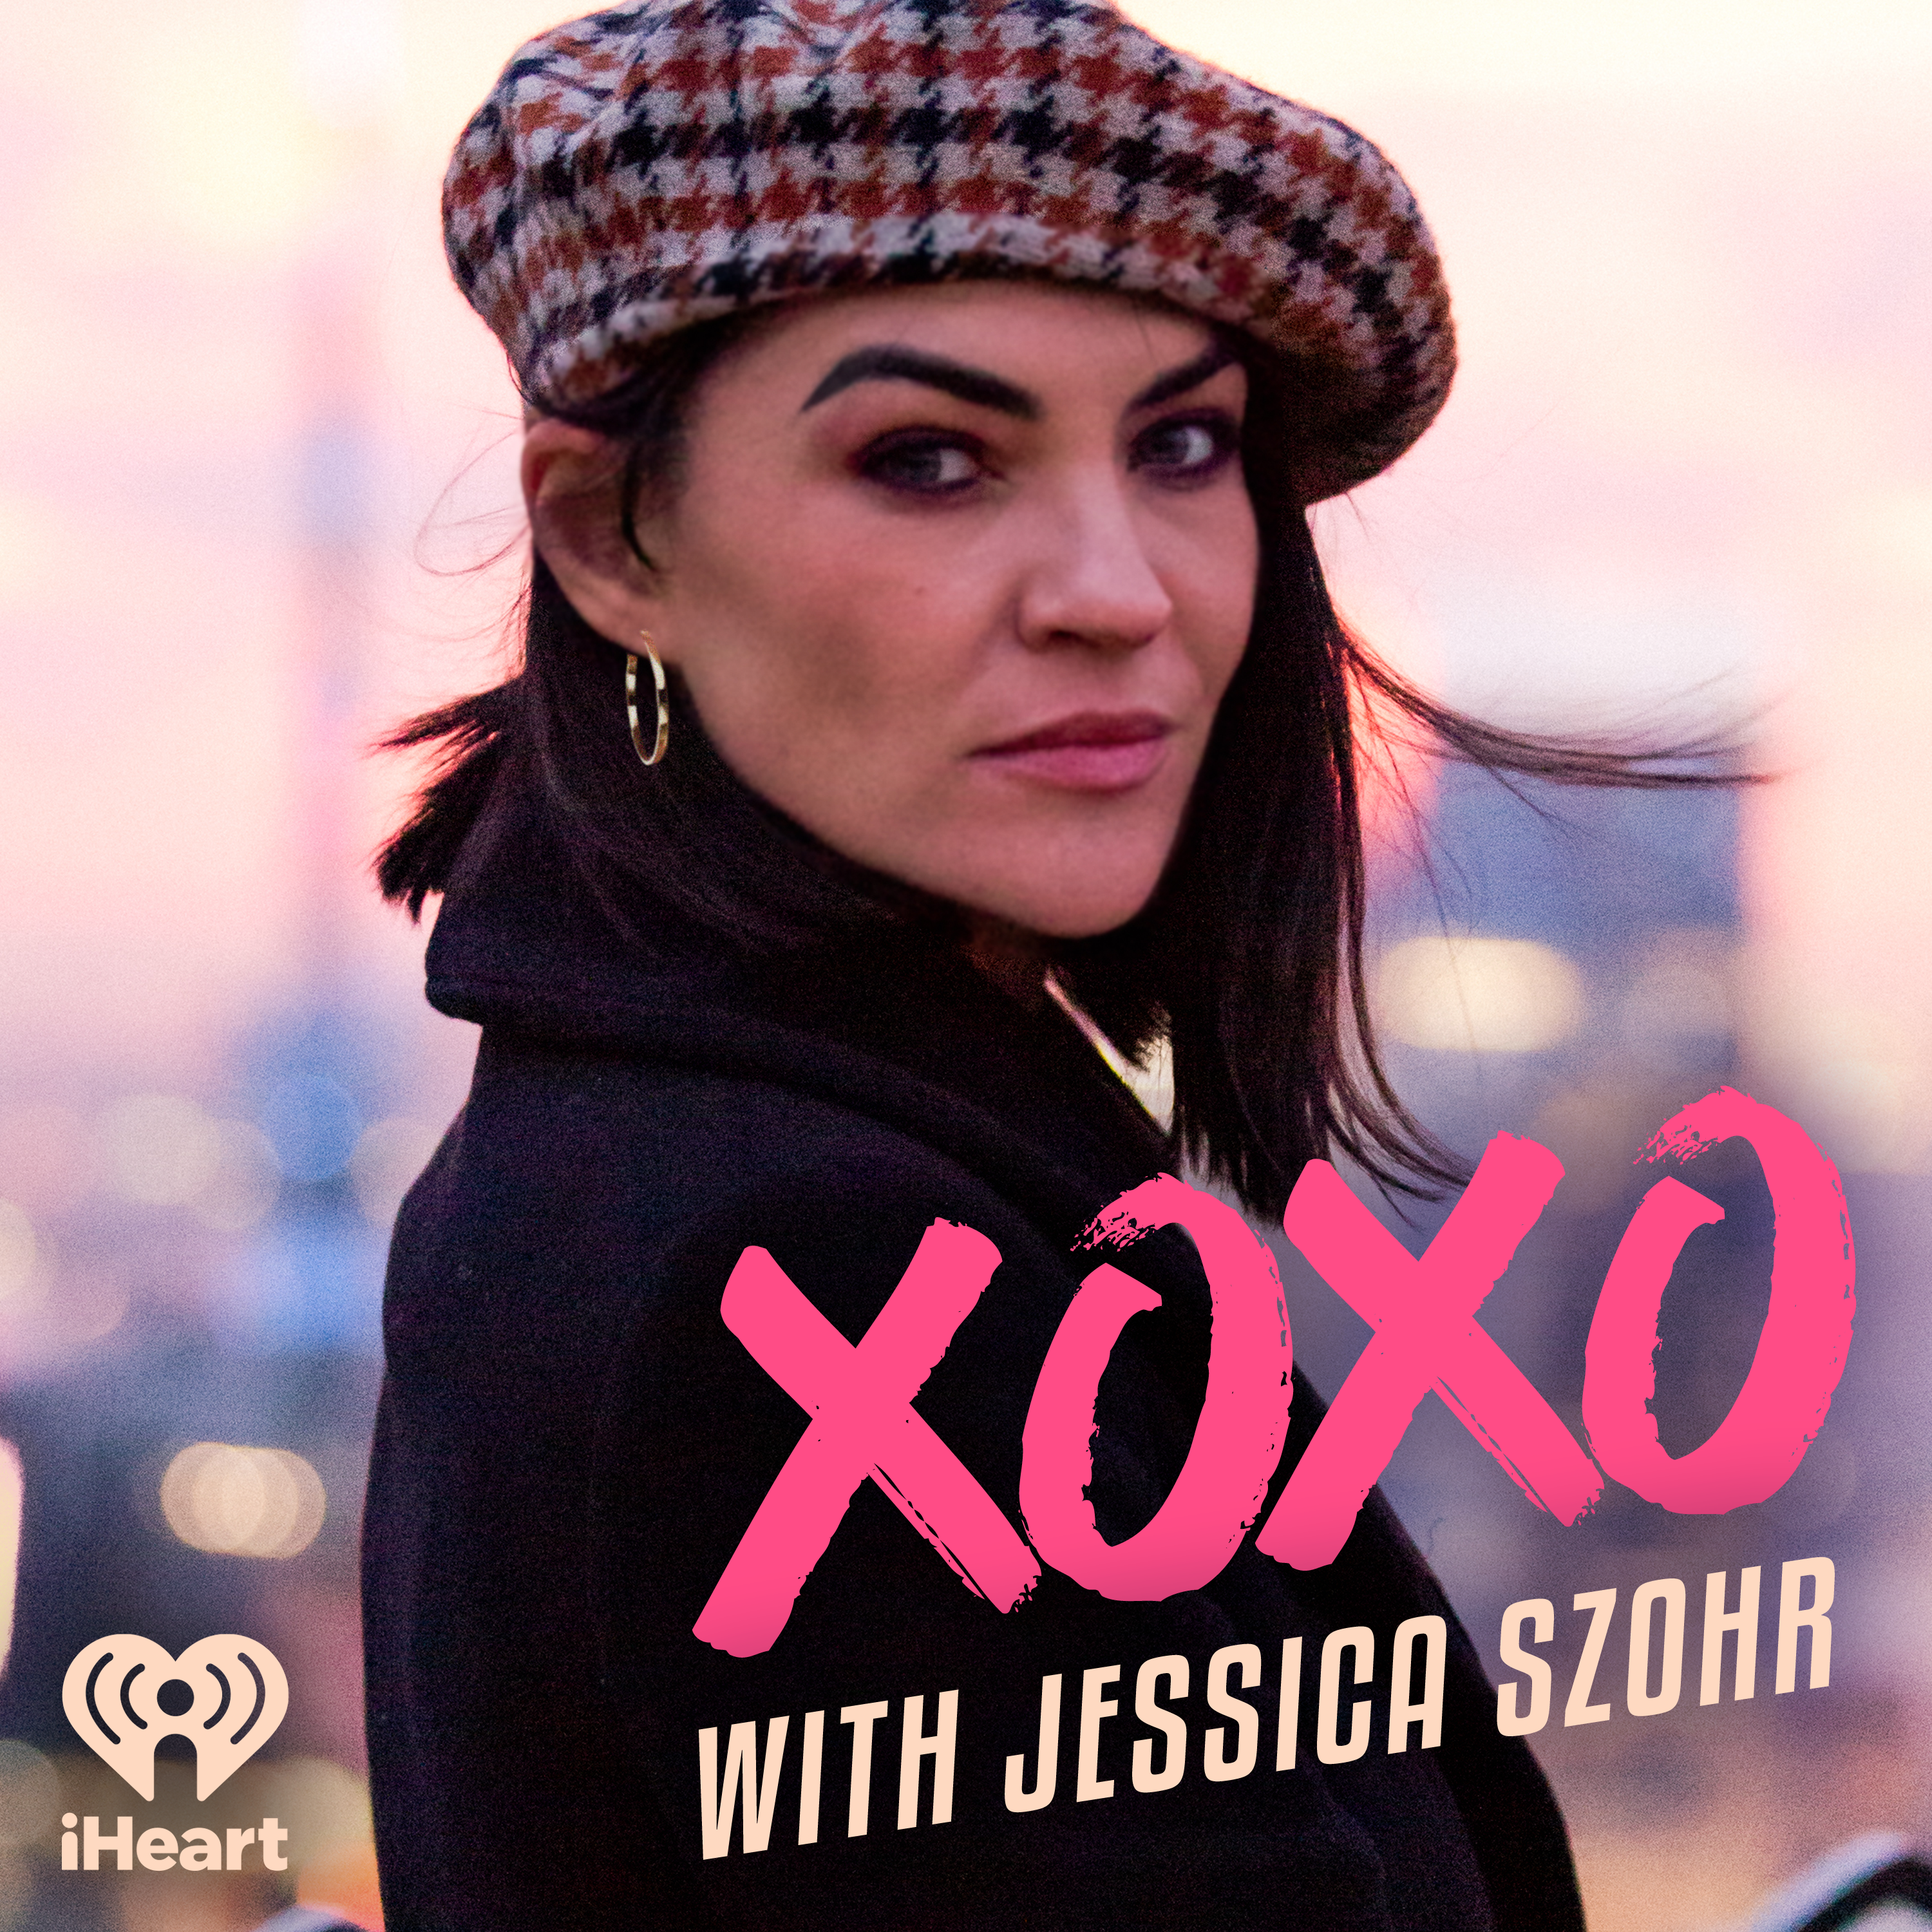 Introducing: XOXO with Jessica Szohr